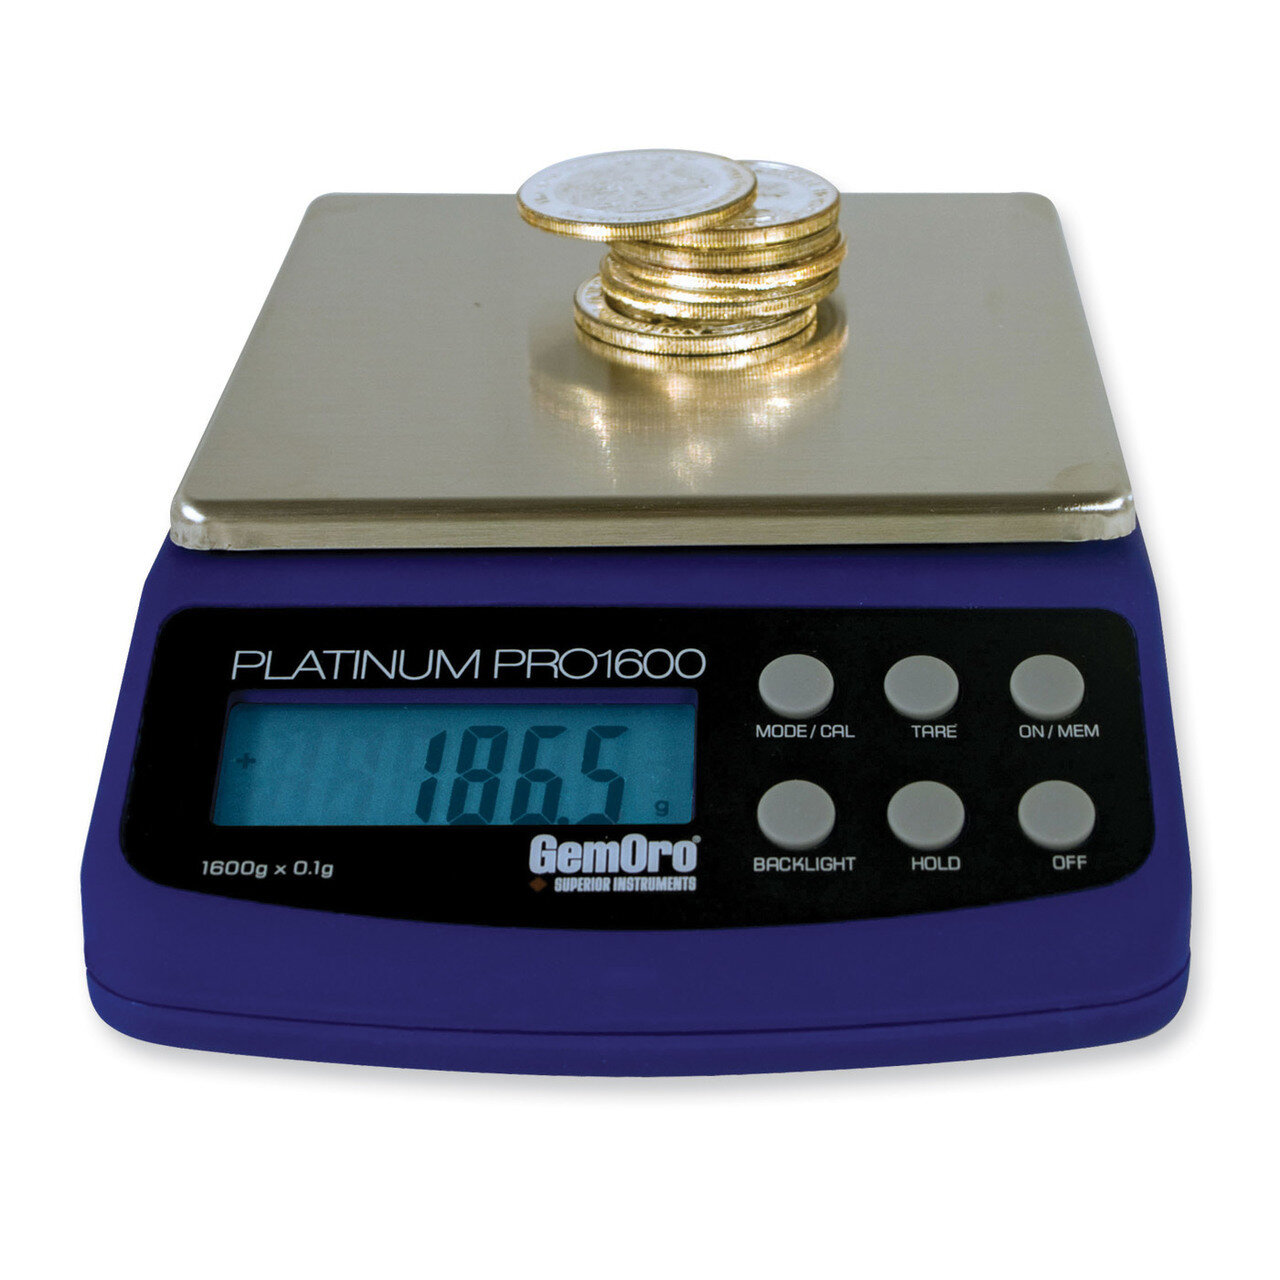 Gemoro Platinum Pro1600 Portable Balance Scale JT4739